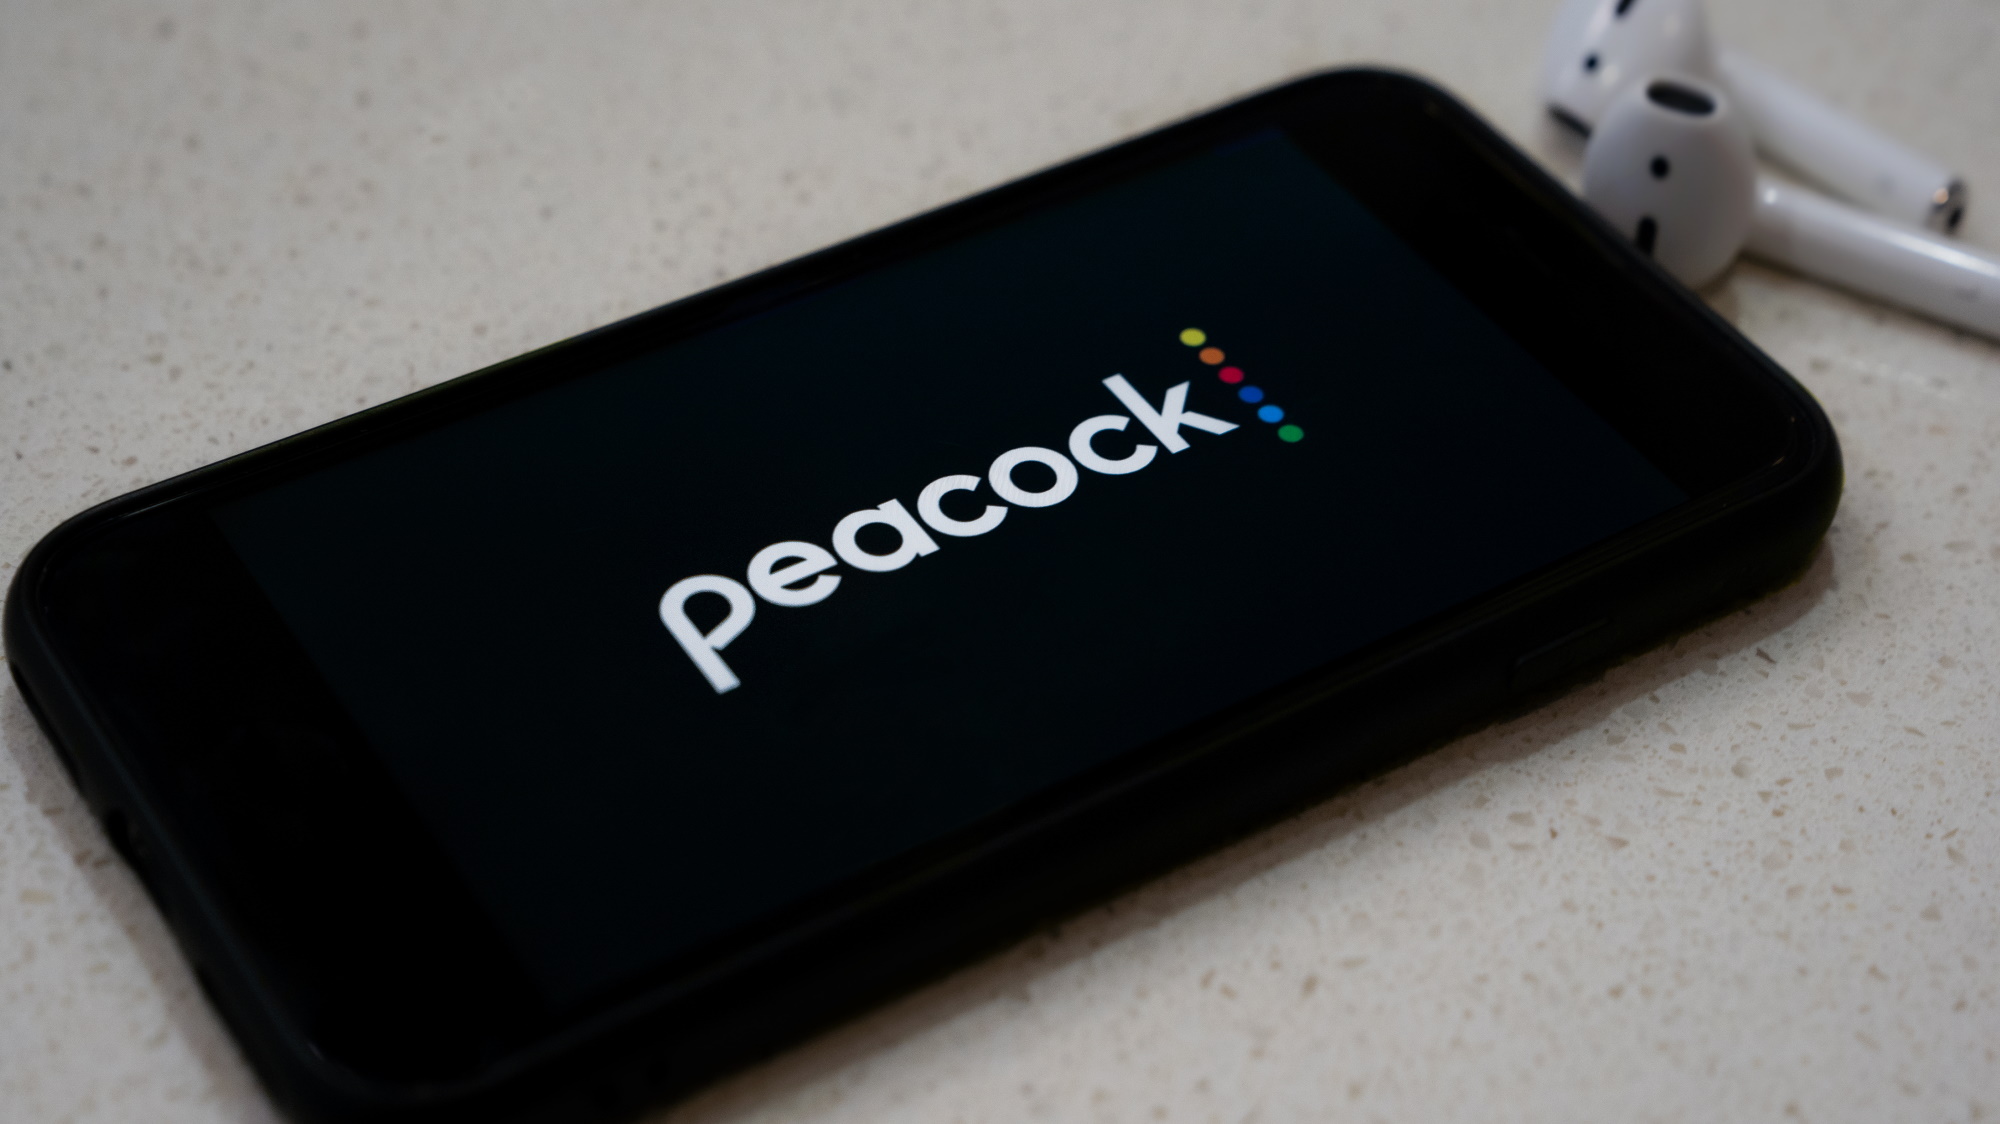 Peacock logo on an iPhone.